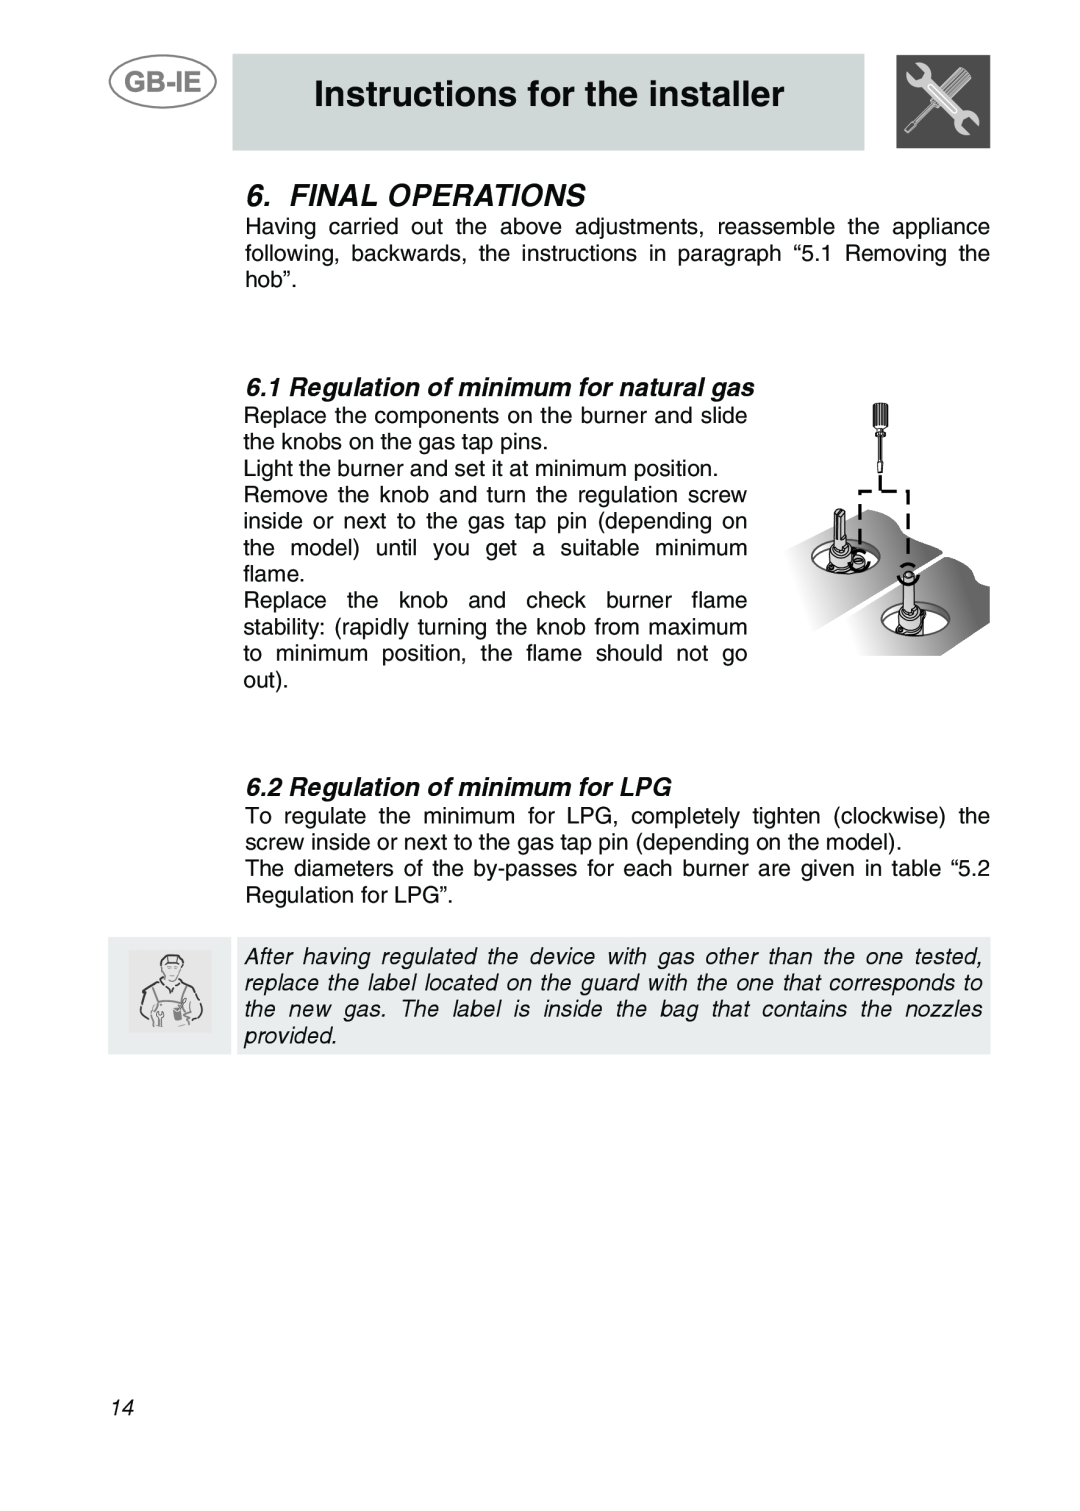 Smeg GCS90XG manual Final Operations, 6.1Regulation of minimum for natural gas, Regulation of minimum for LPG 